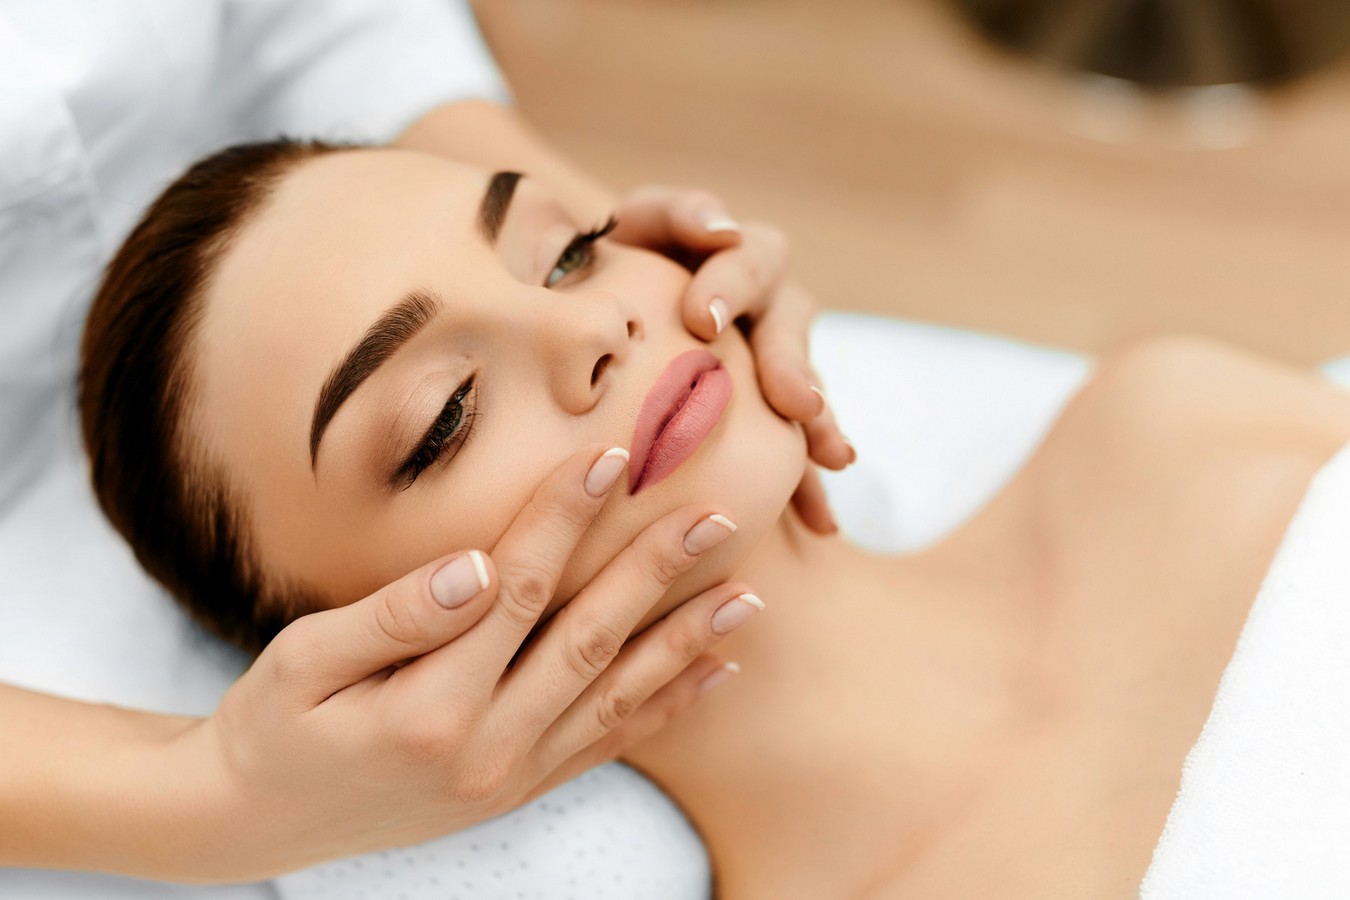 Skin, Body Care. Woman Getting Beauty Spa Face Massage. Treatmen